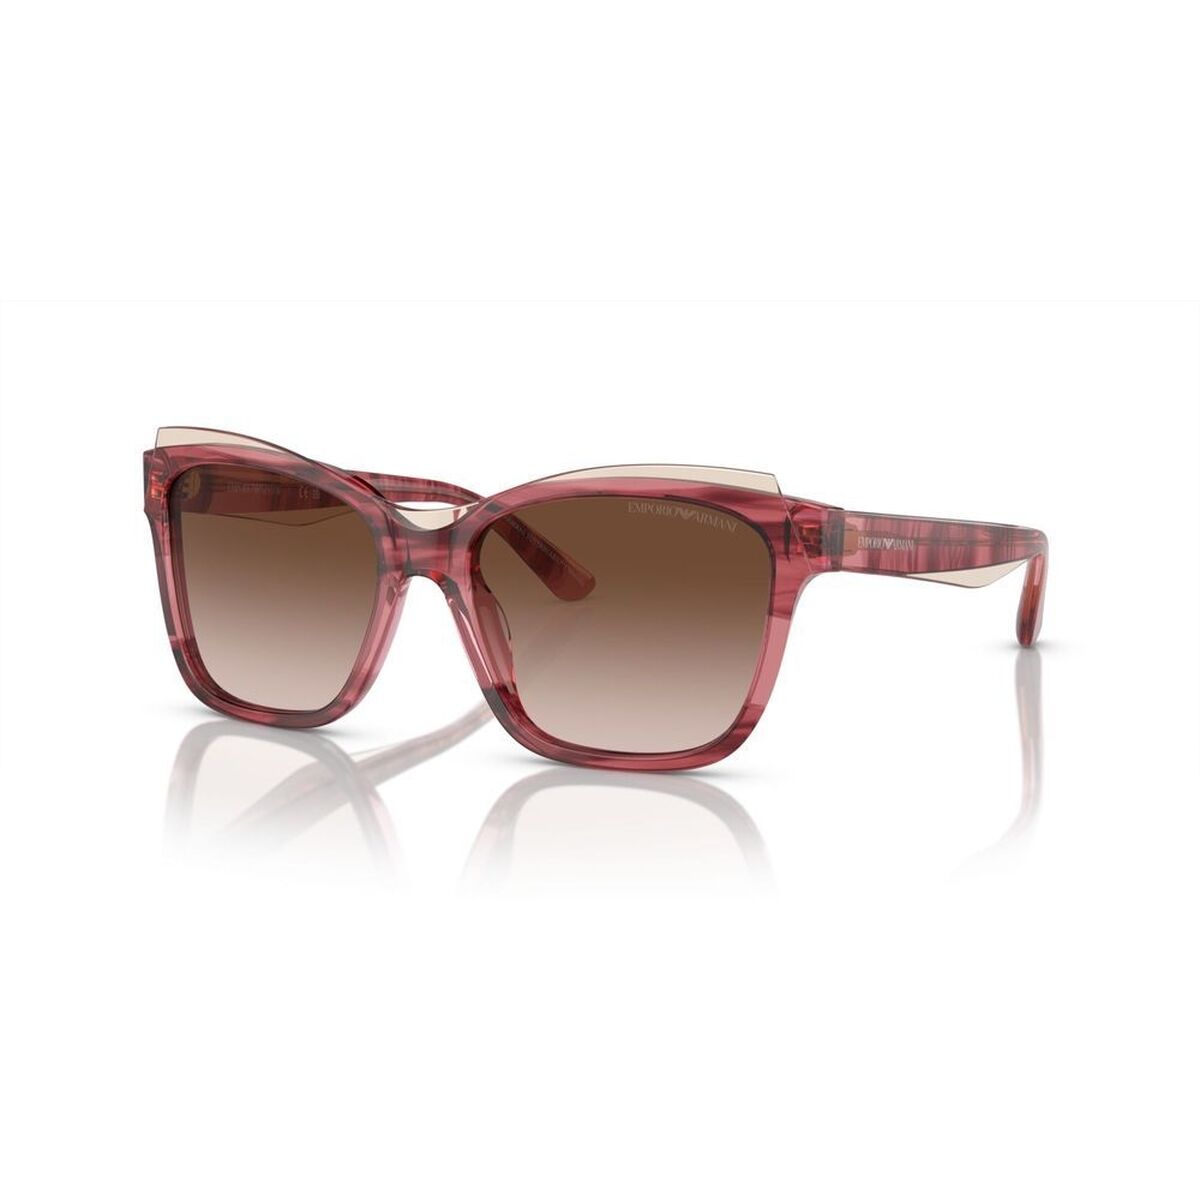 Kaufe Damensonnenbrille Armani EA 4209 bei AWK Flagship um € 167.00